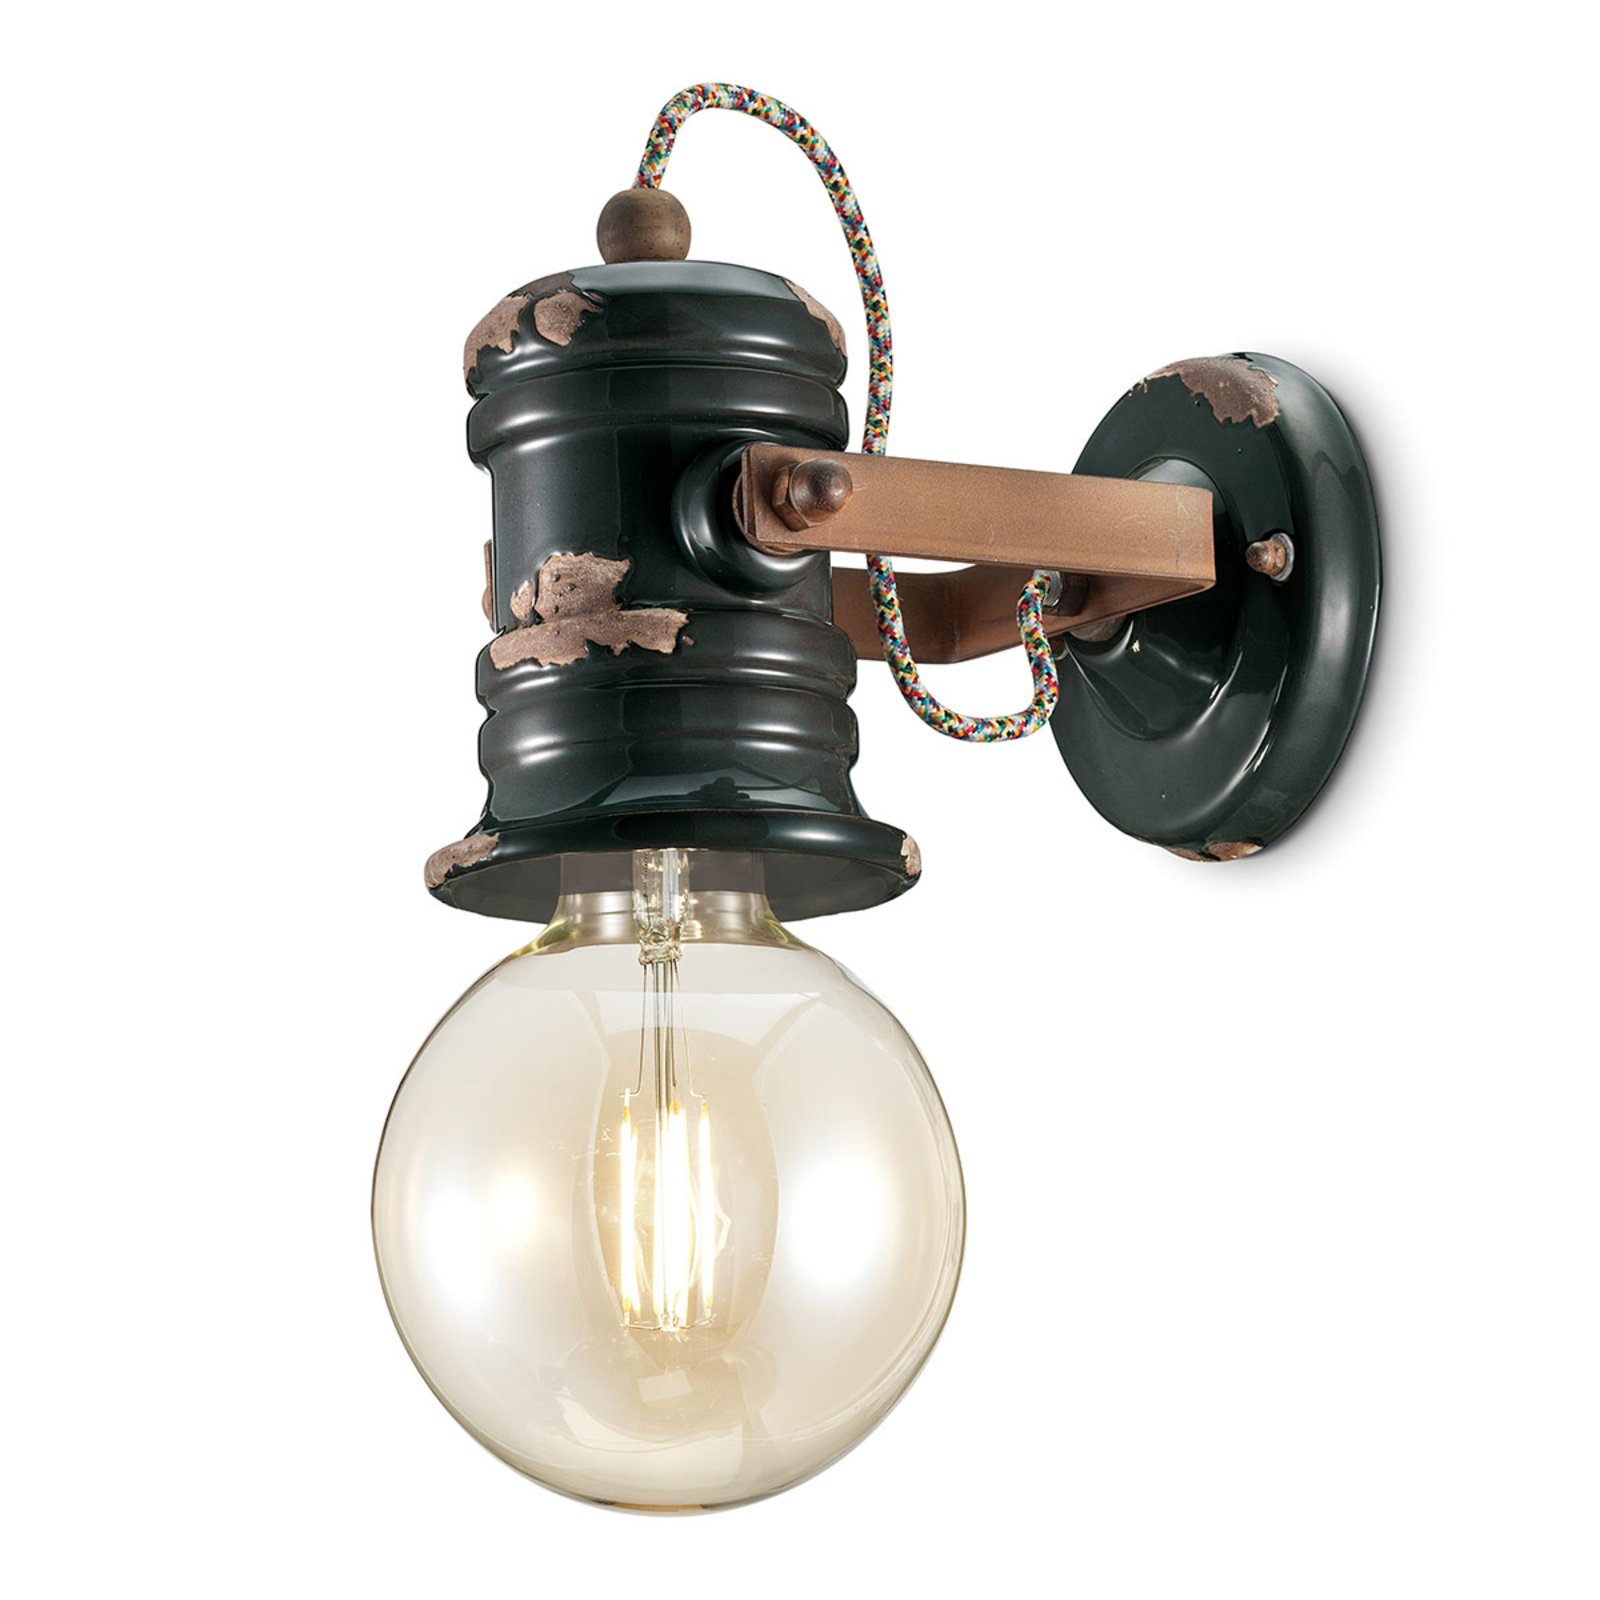 C1843 fali lámpa vintage design fekete színben